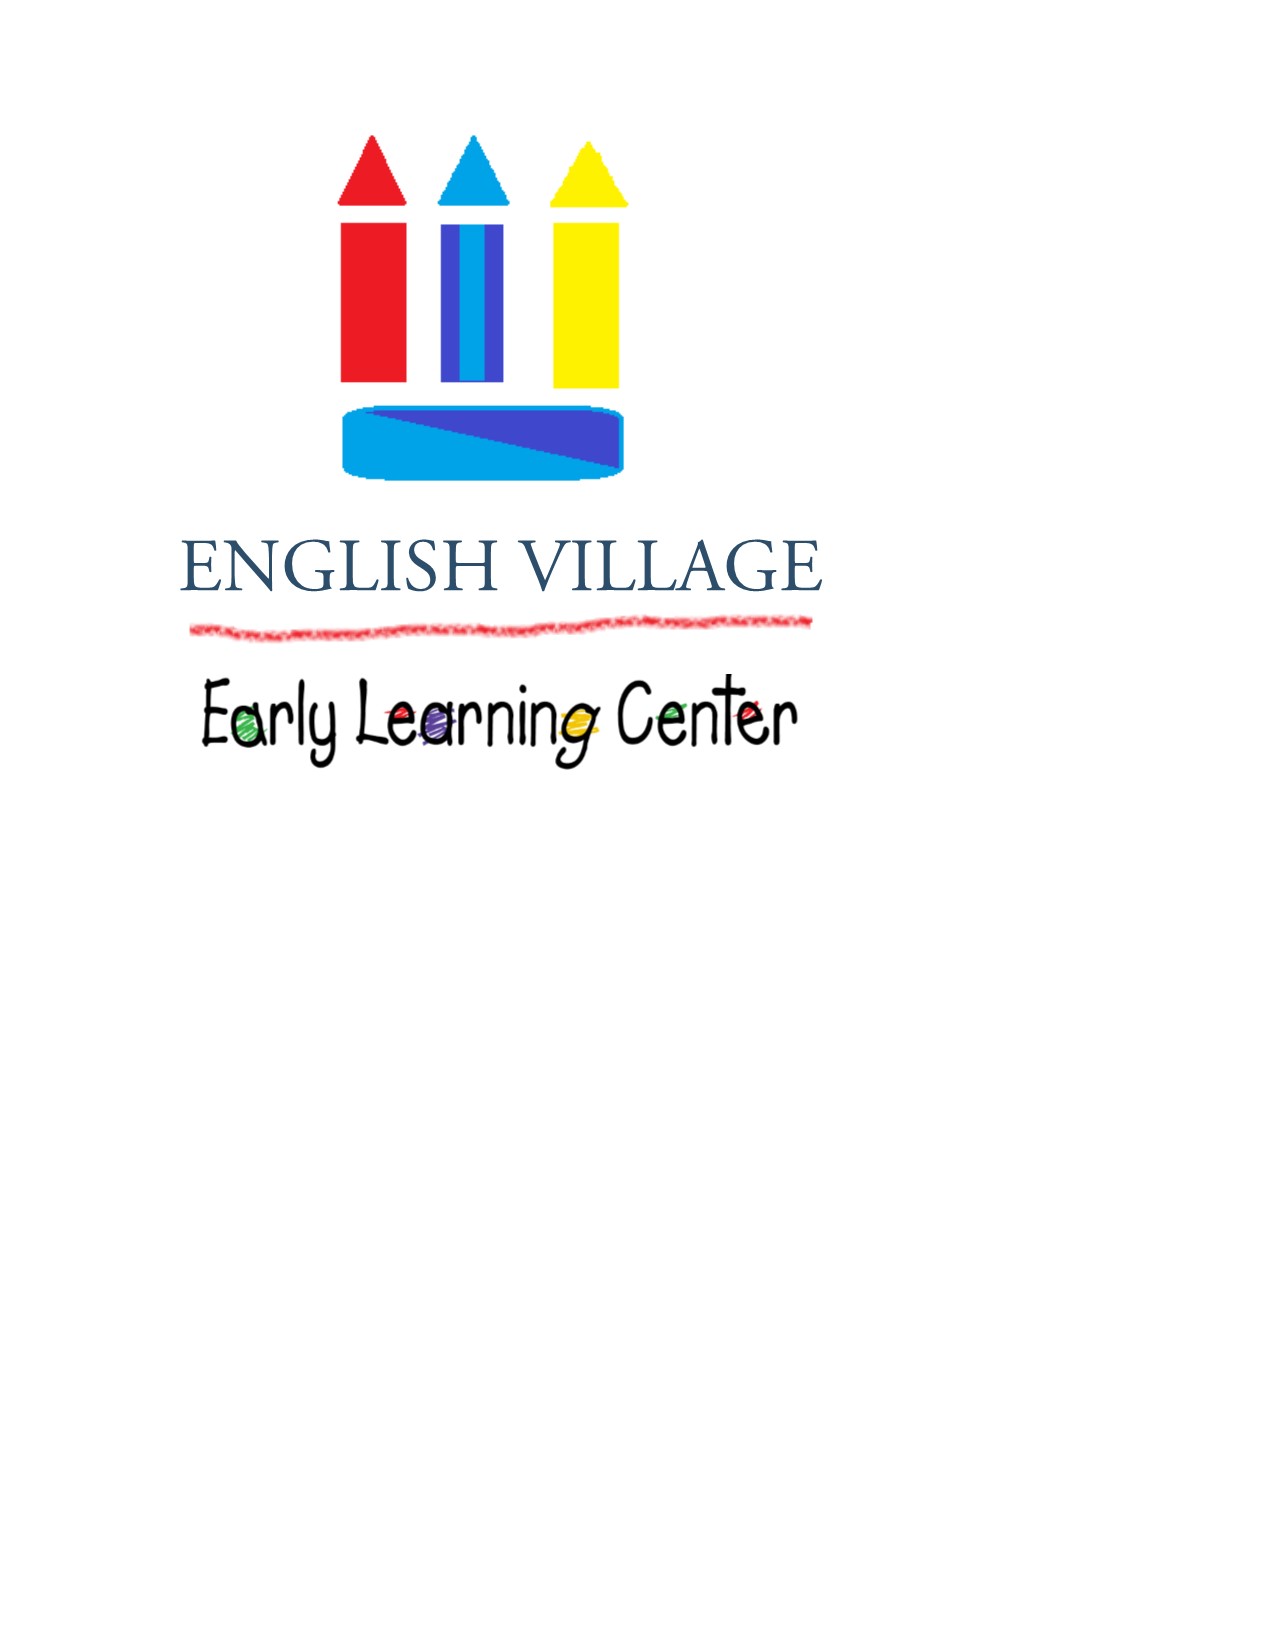 English Village Day Care Center